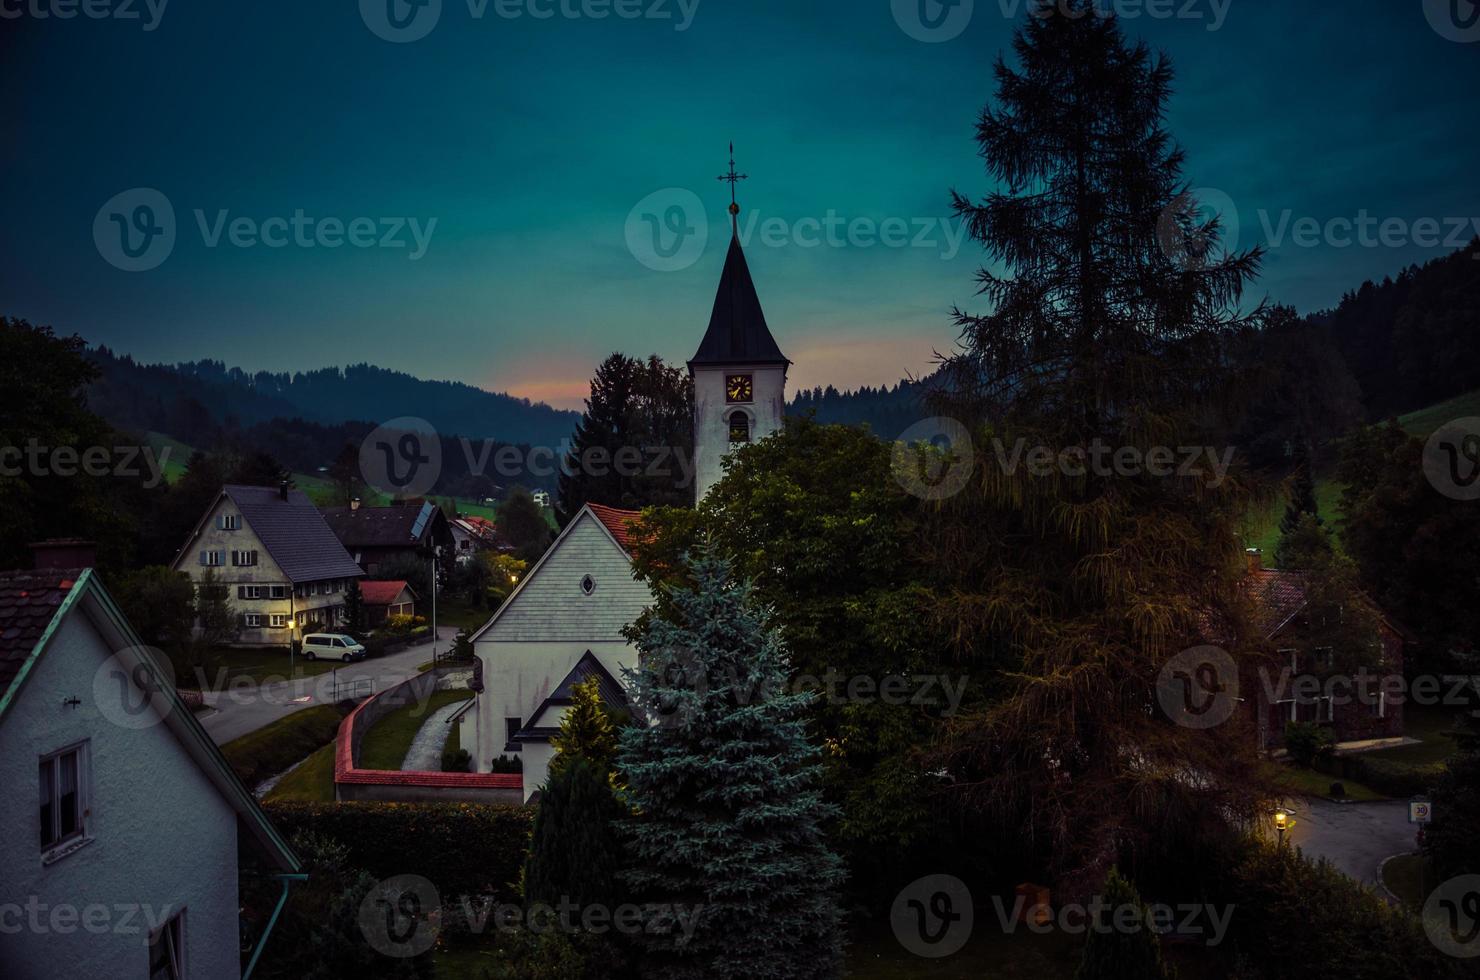 klein dorp bolsternang met kerk, Zuid-Duitsland, bij zonsondergang foto